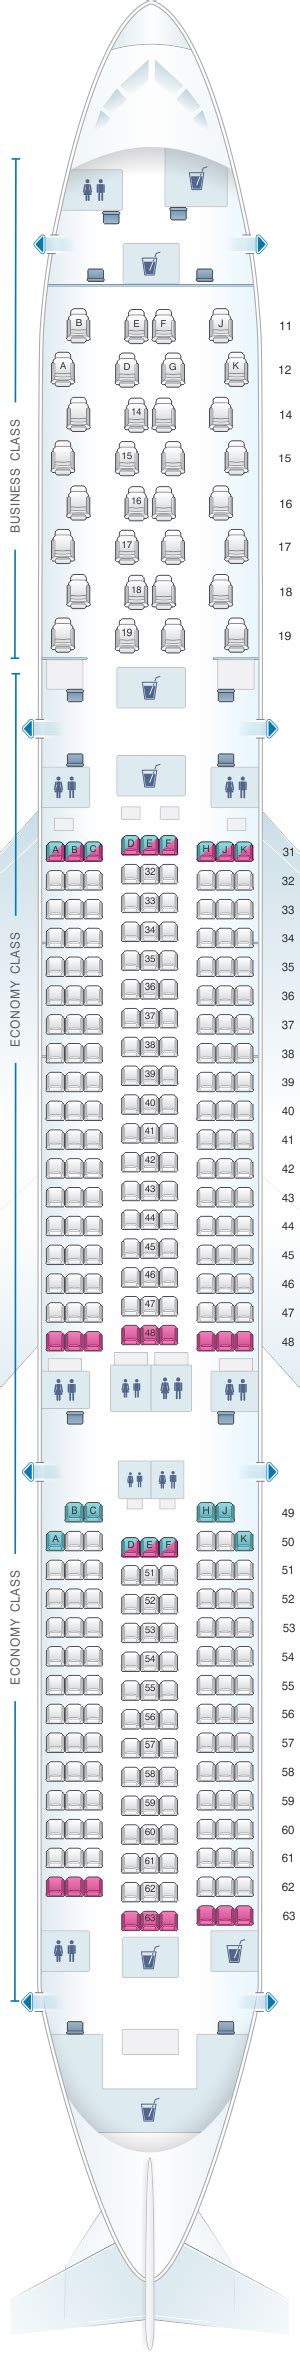 Delta A350 Seat Map Elcho Table